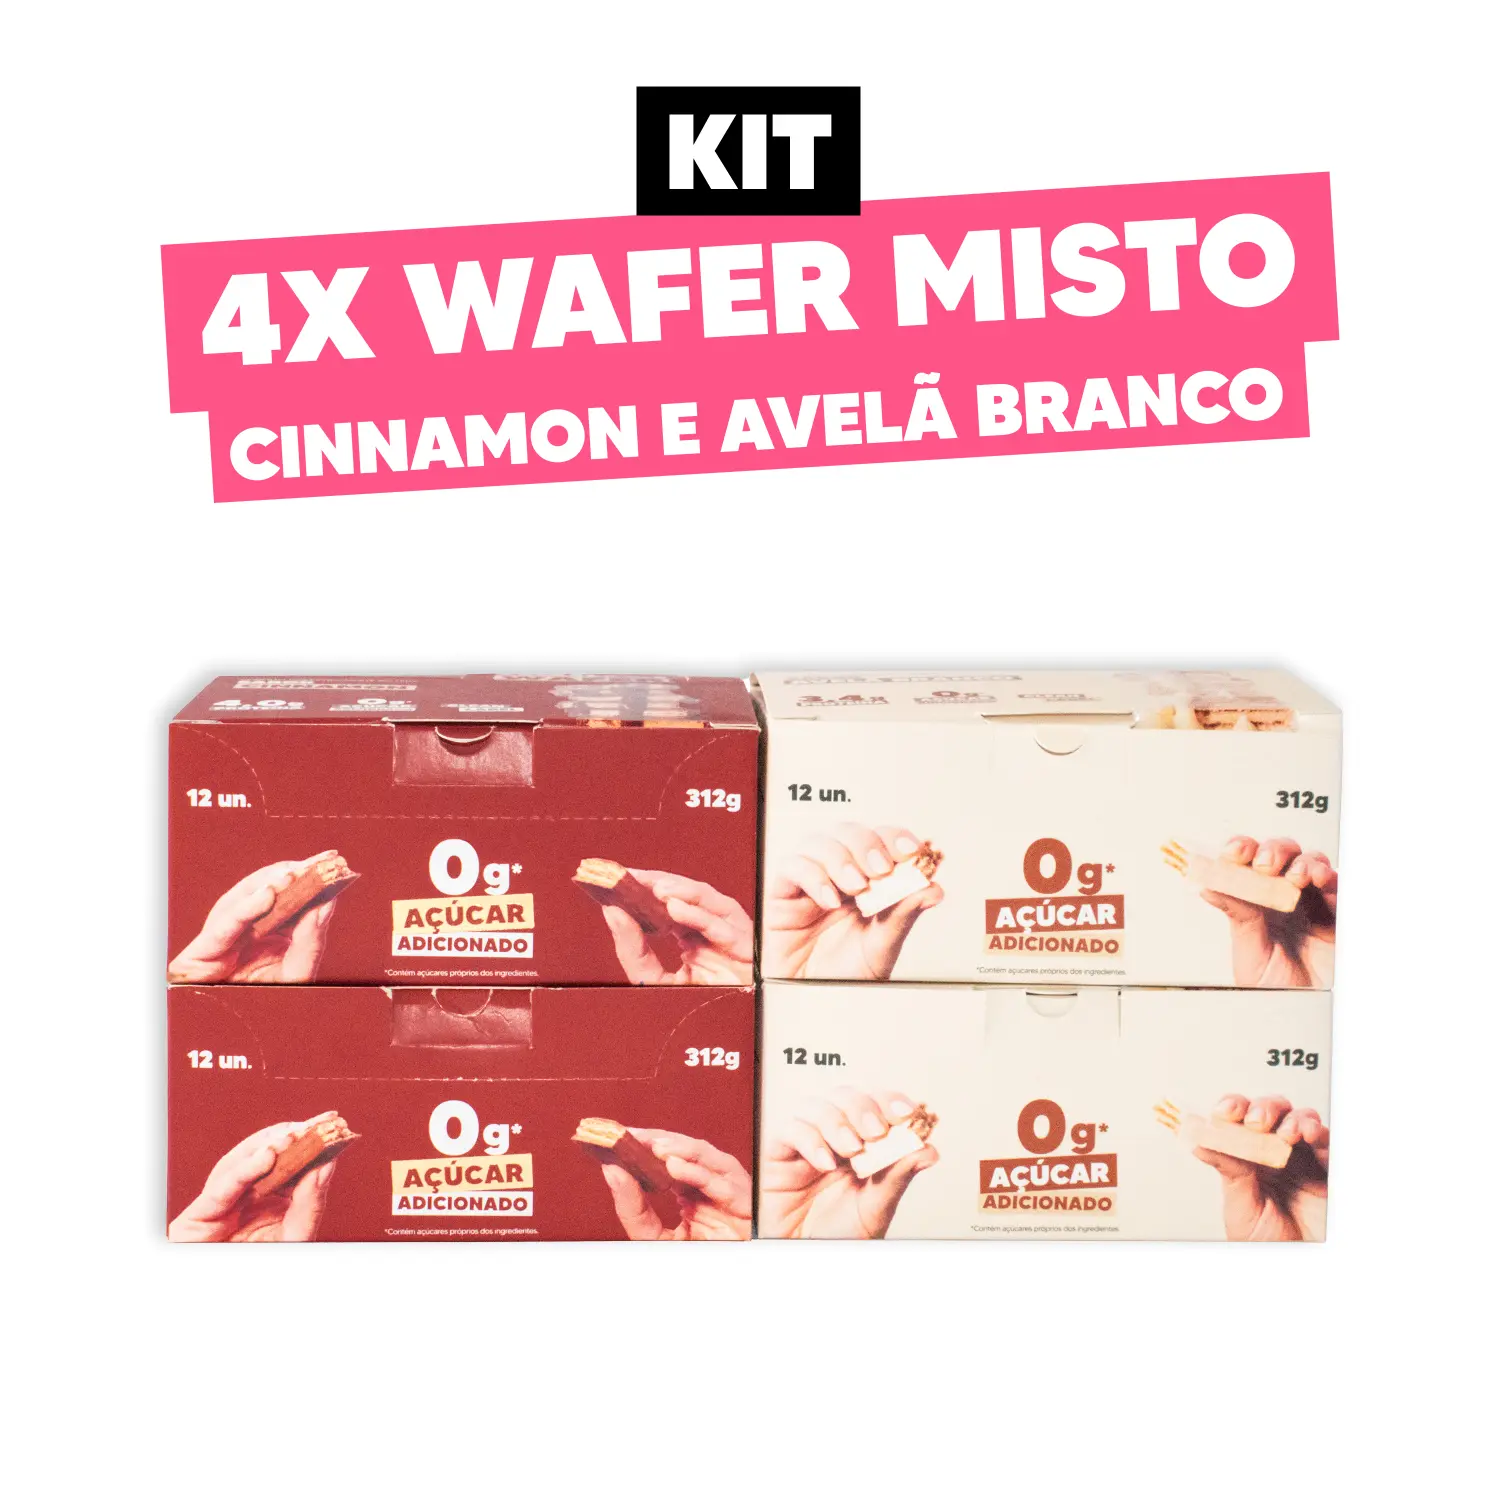 4x Wafer (Cinnamon + Avelã Branco)